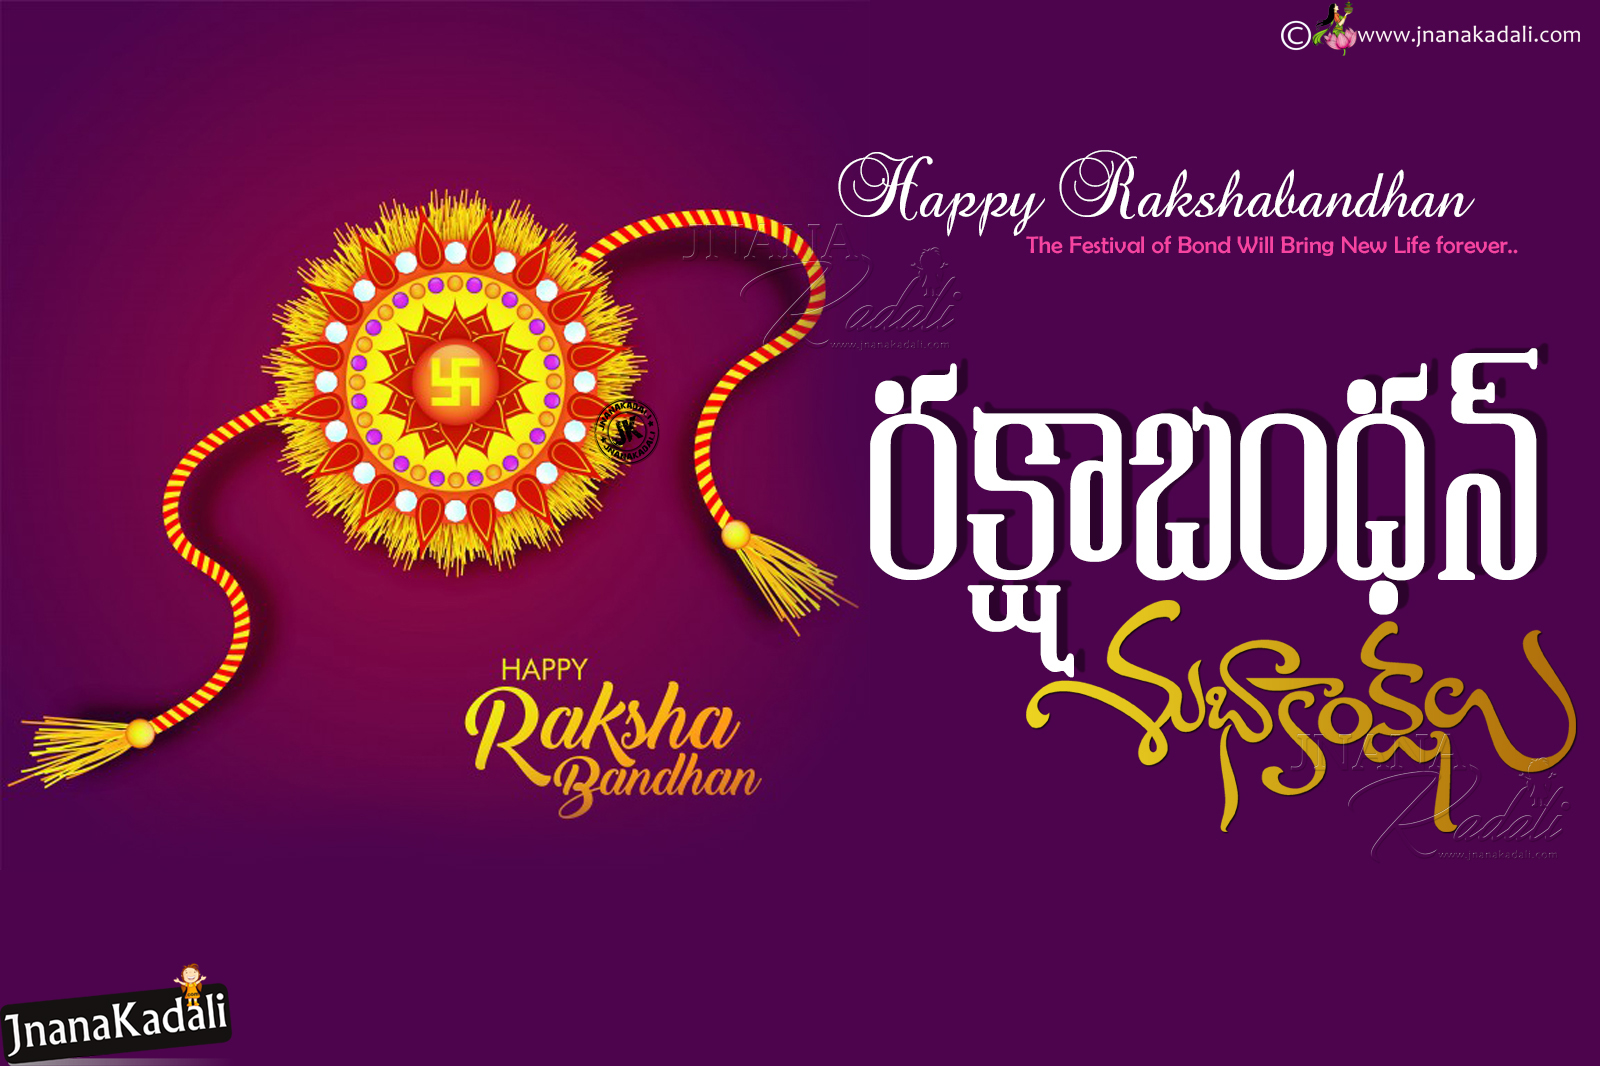 2018 Rakshabandhan Greetings hd wallpapers in Telugu Free download ...